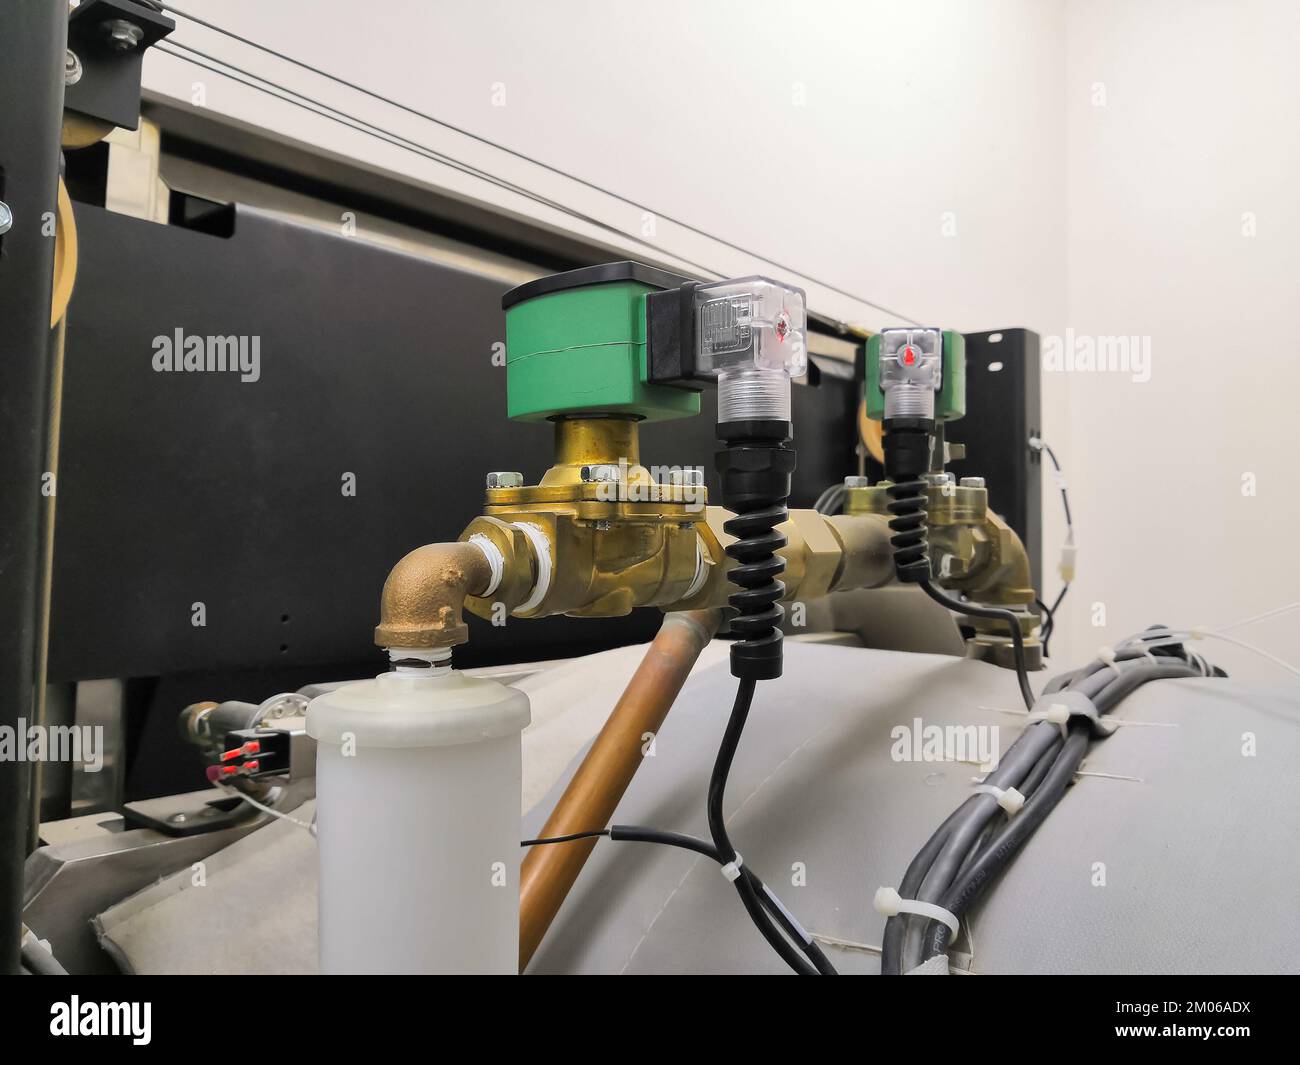 Electric Solenoid Valve To Control Steam In The Sterilization Machine Stock Photo